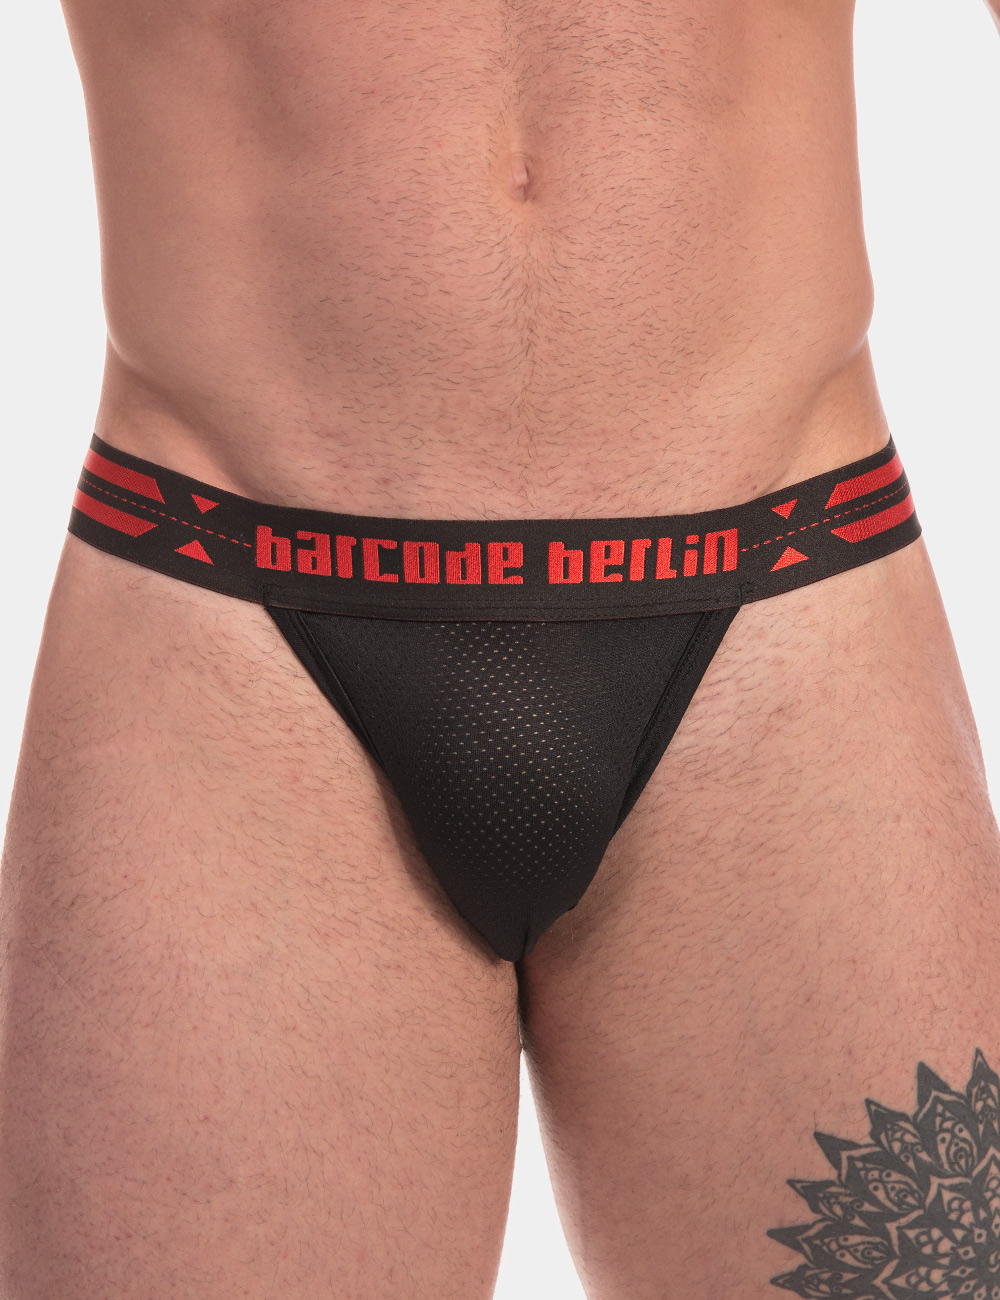 Barcode Berlin underwear - Thong Claude Black